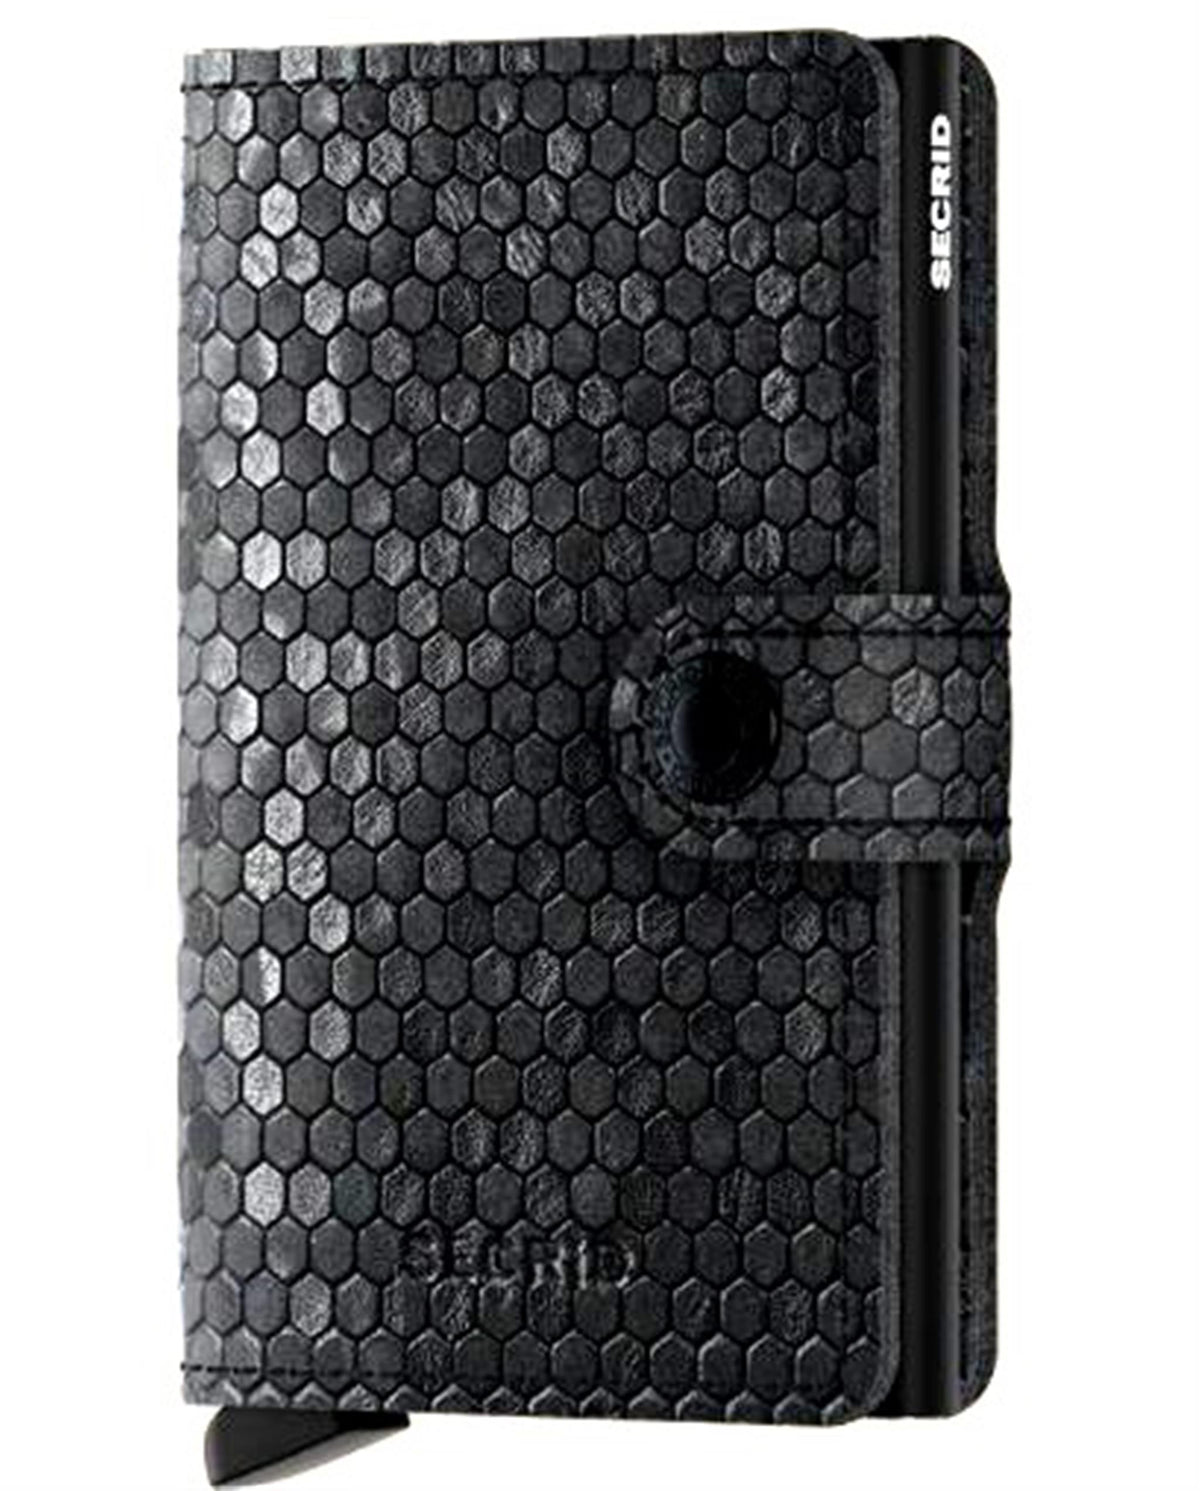 Secrid Miniwallet - Black Hexagon Pattern